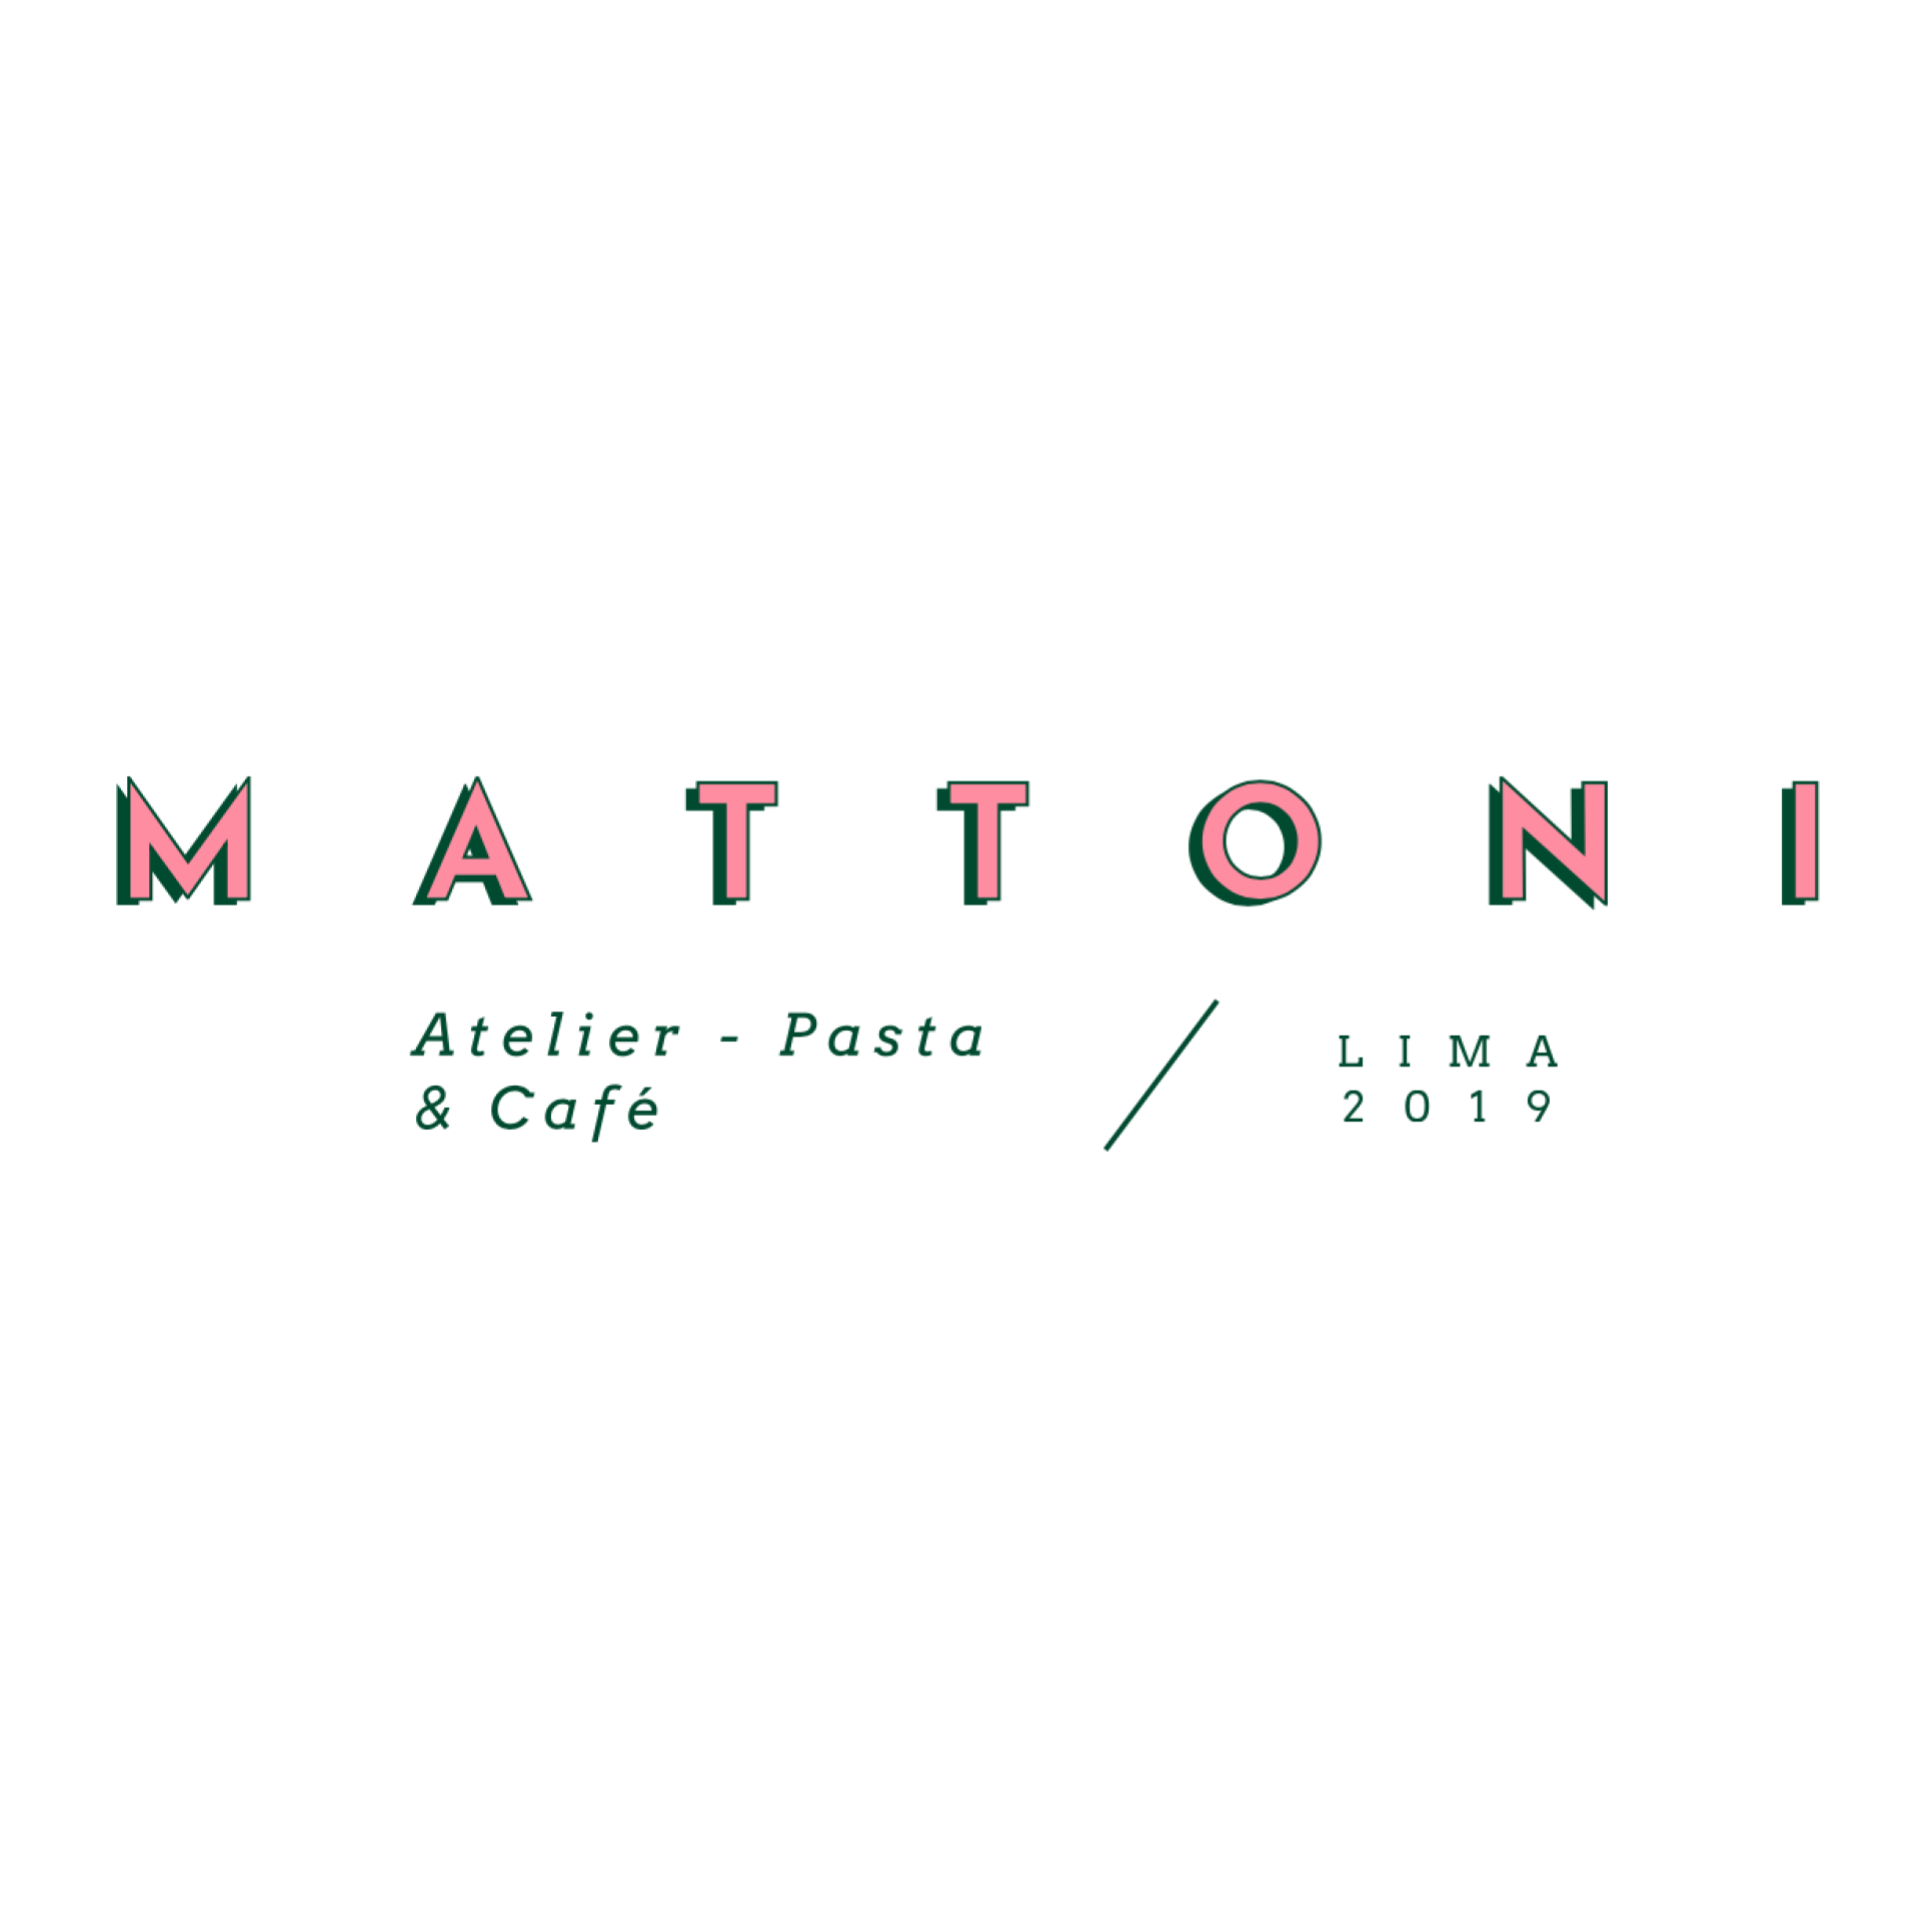 Restaurante Mattoni Atelier Pasta & Café | Vales de consumo (Digital)*